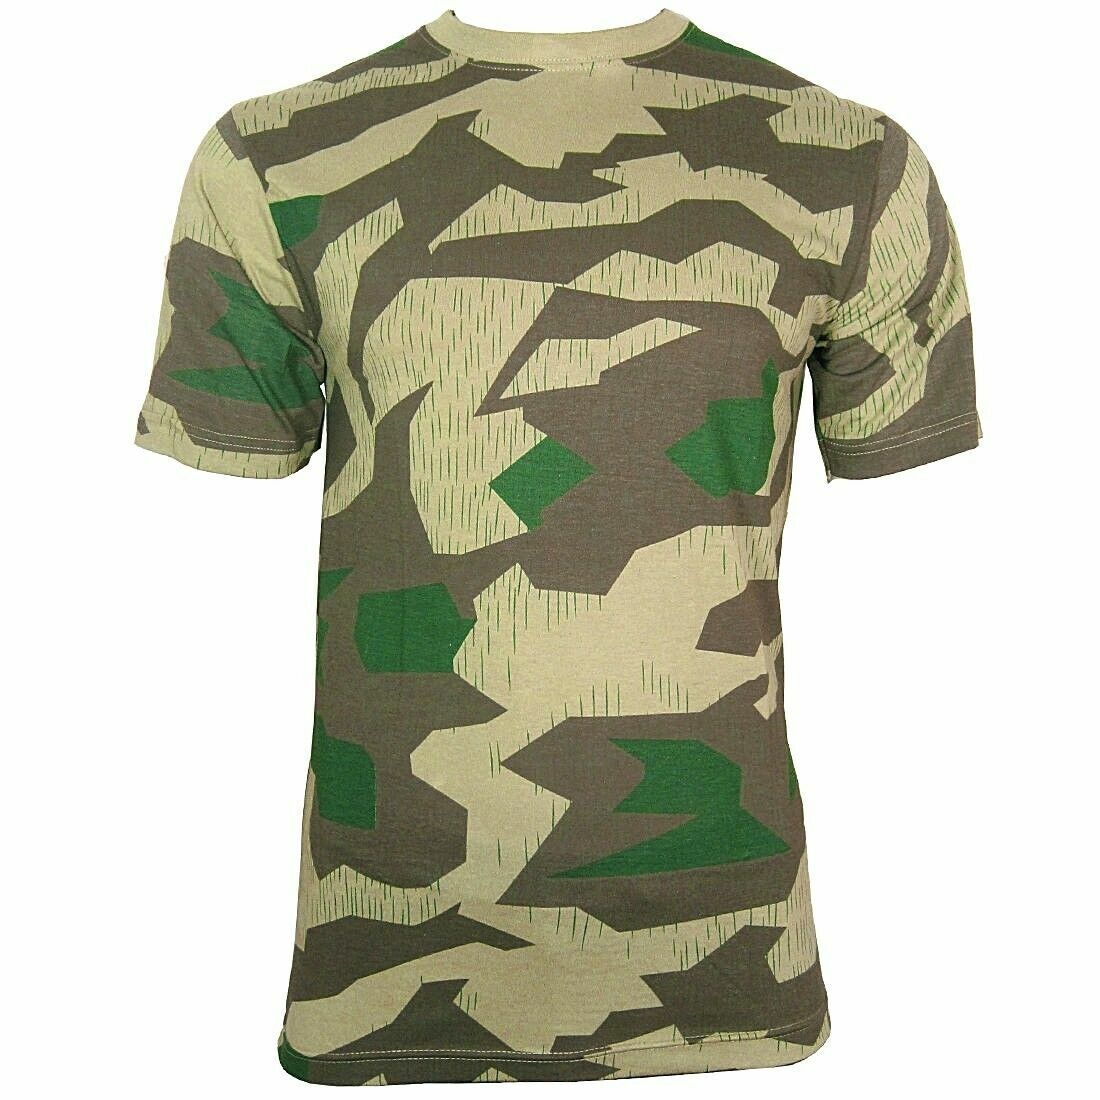 German Splinter Camouflage T-Shirt WWII Camo Pattern Combat Army Tee 100% Cotton